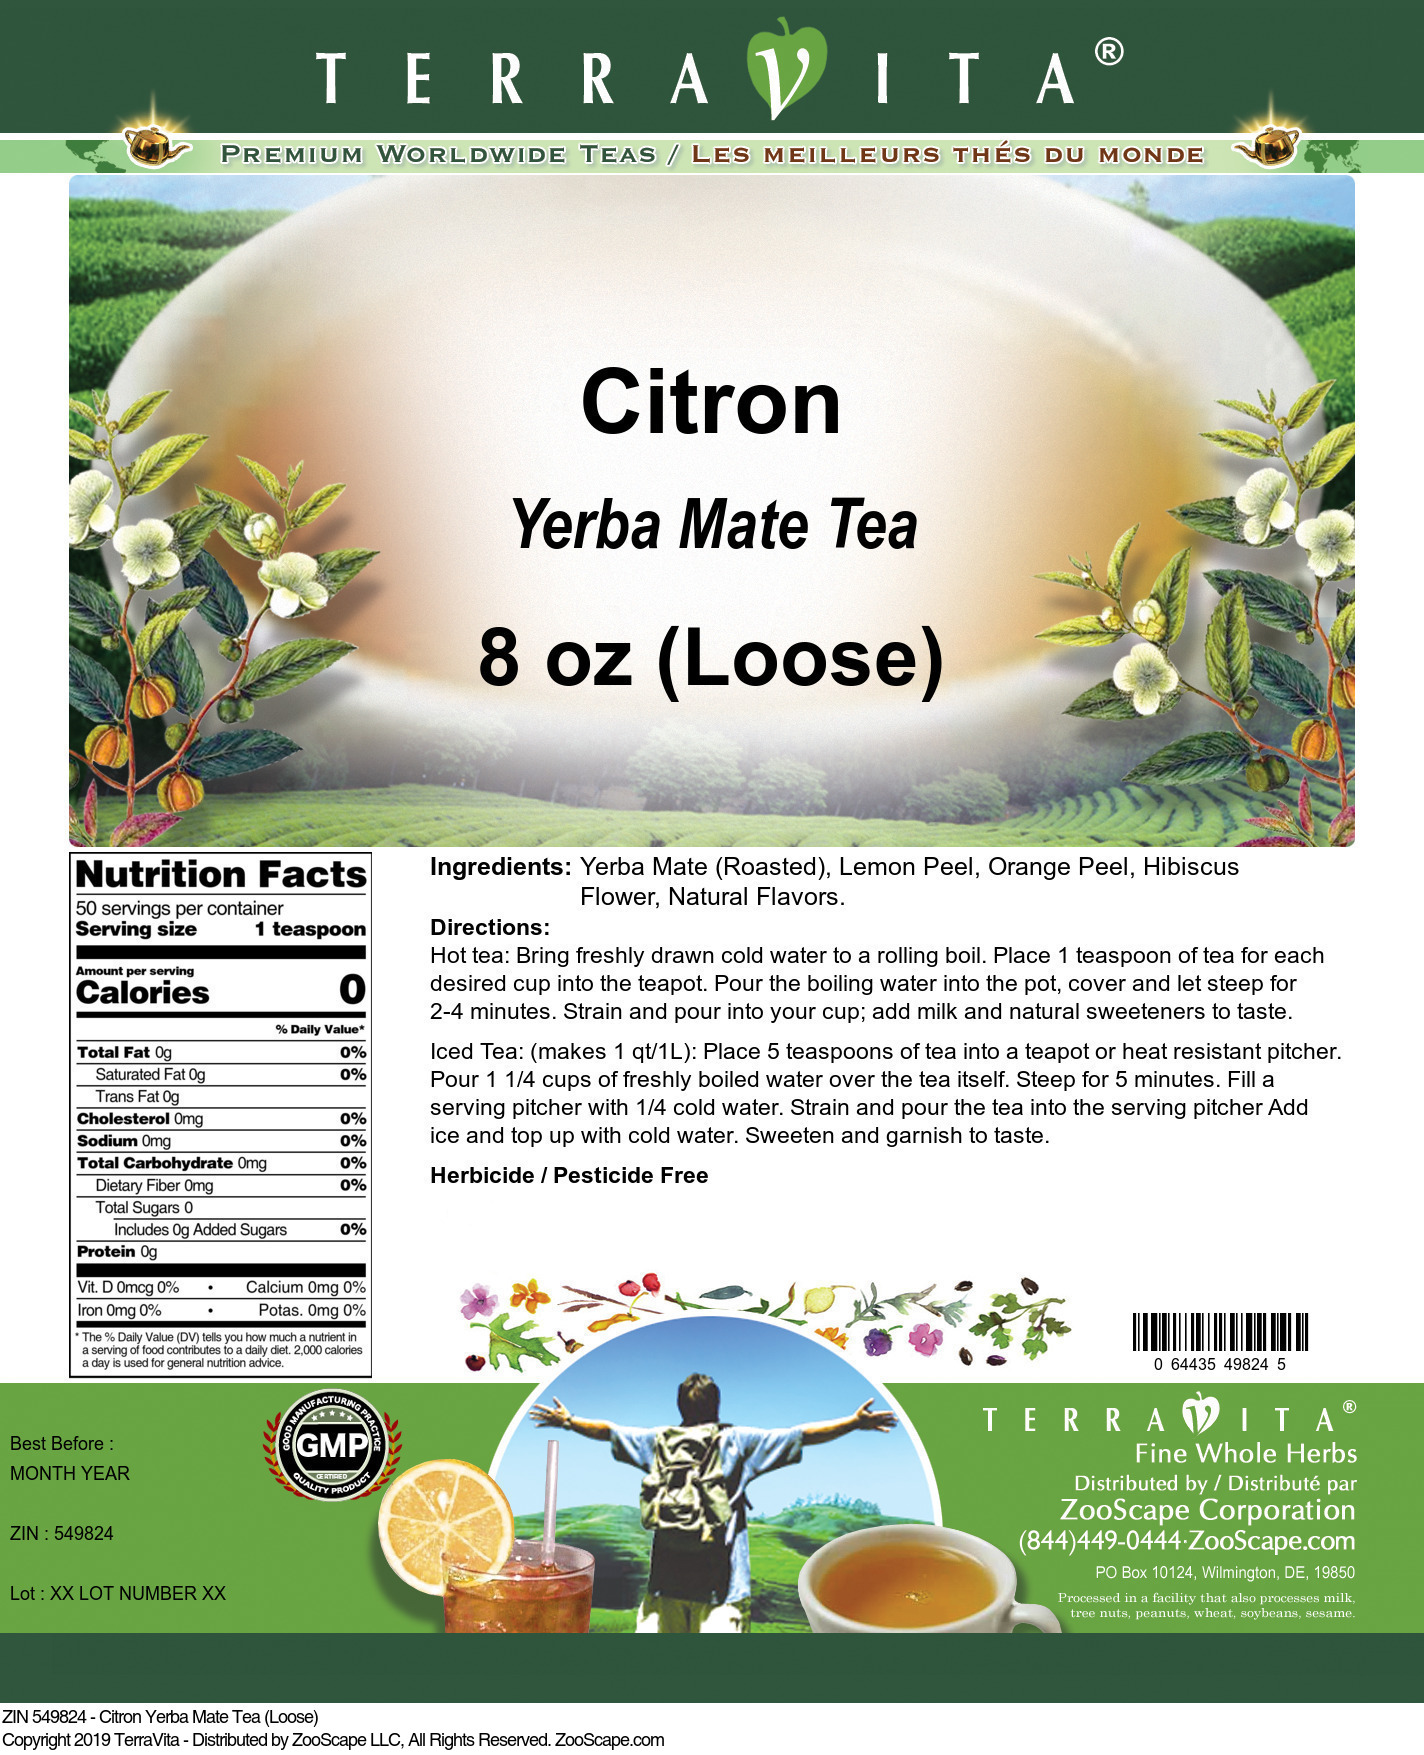 Citron Yerba Mate Tea (Loose) - Label